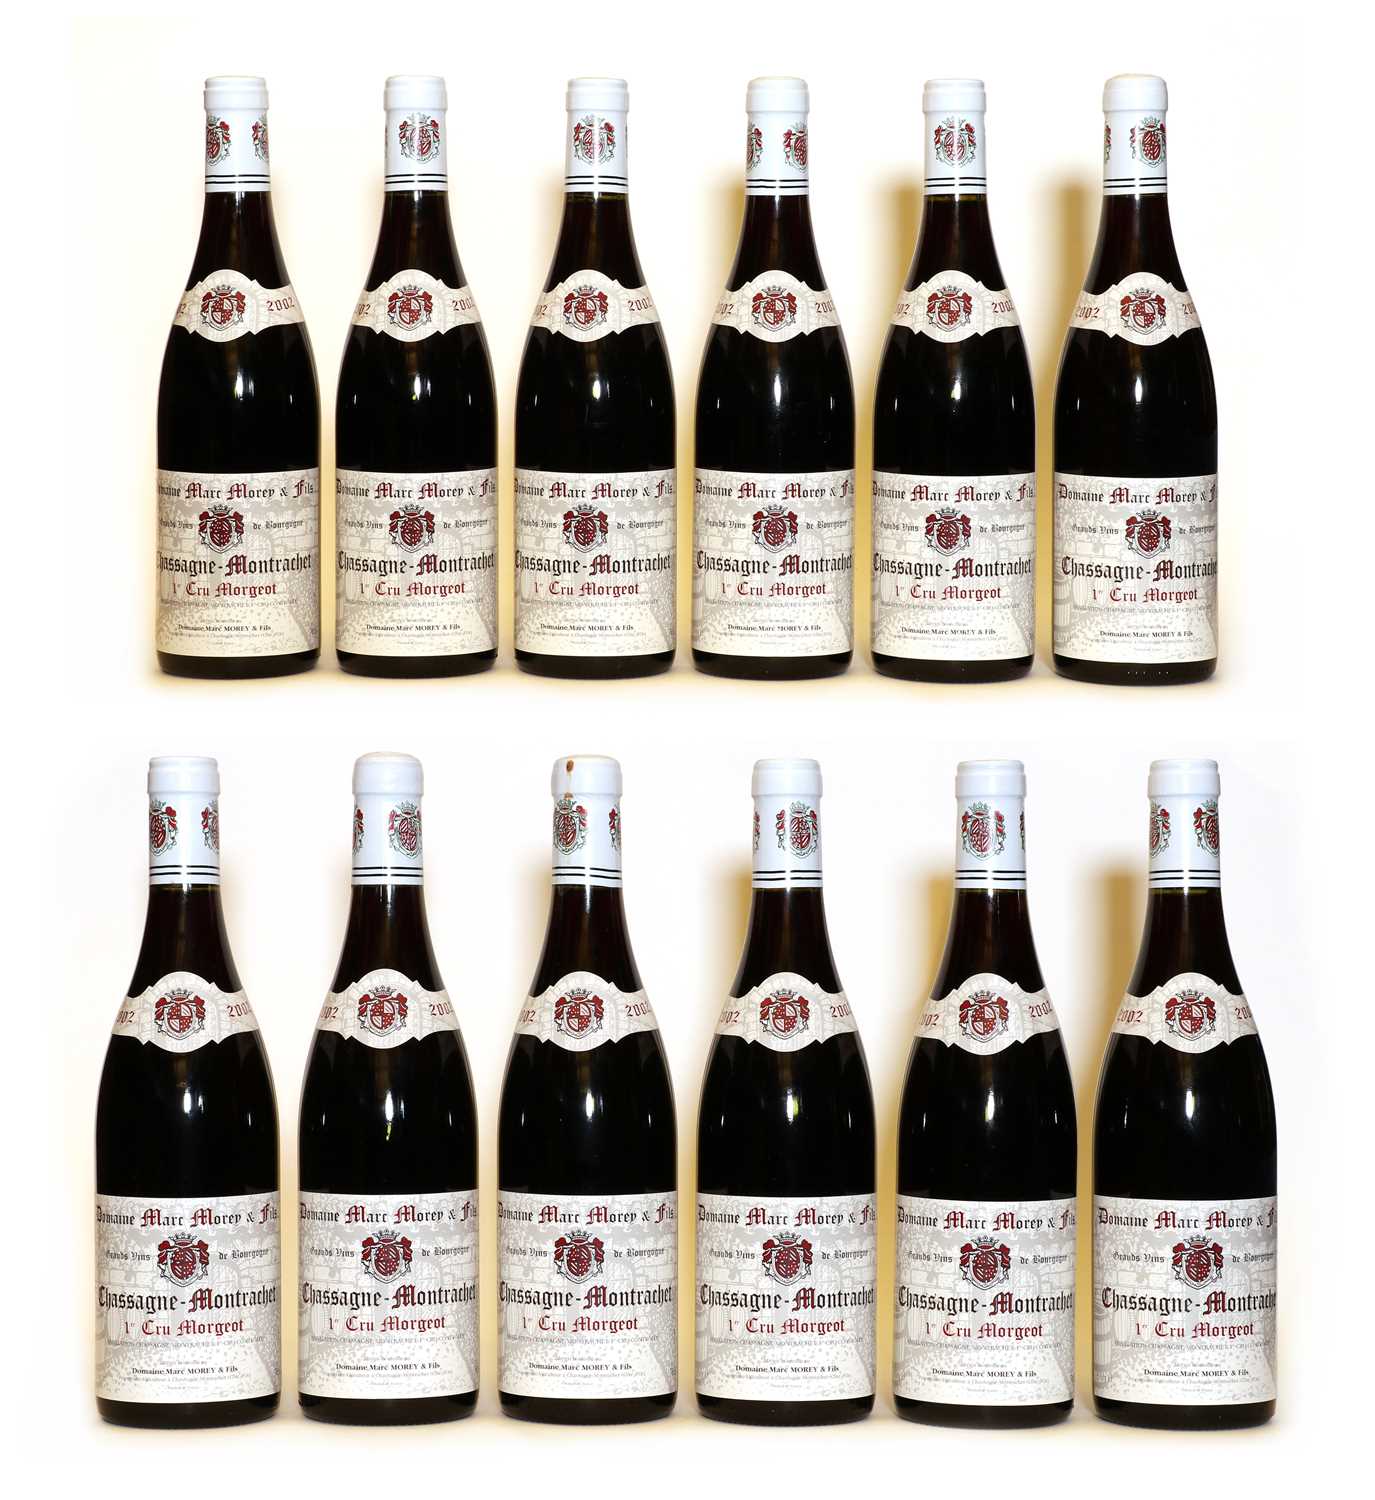 Lot 55 - Chassagne Montrachet, 1er Cru, Morgeot, Nicolas Potel, 2002, twelve bottles (boxed)